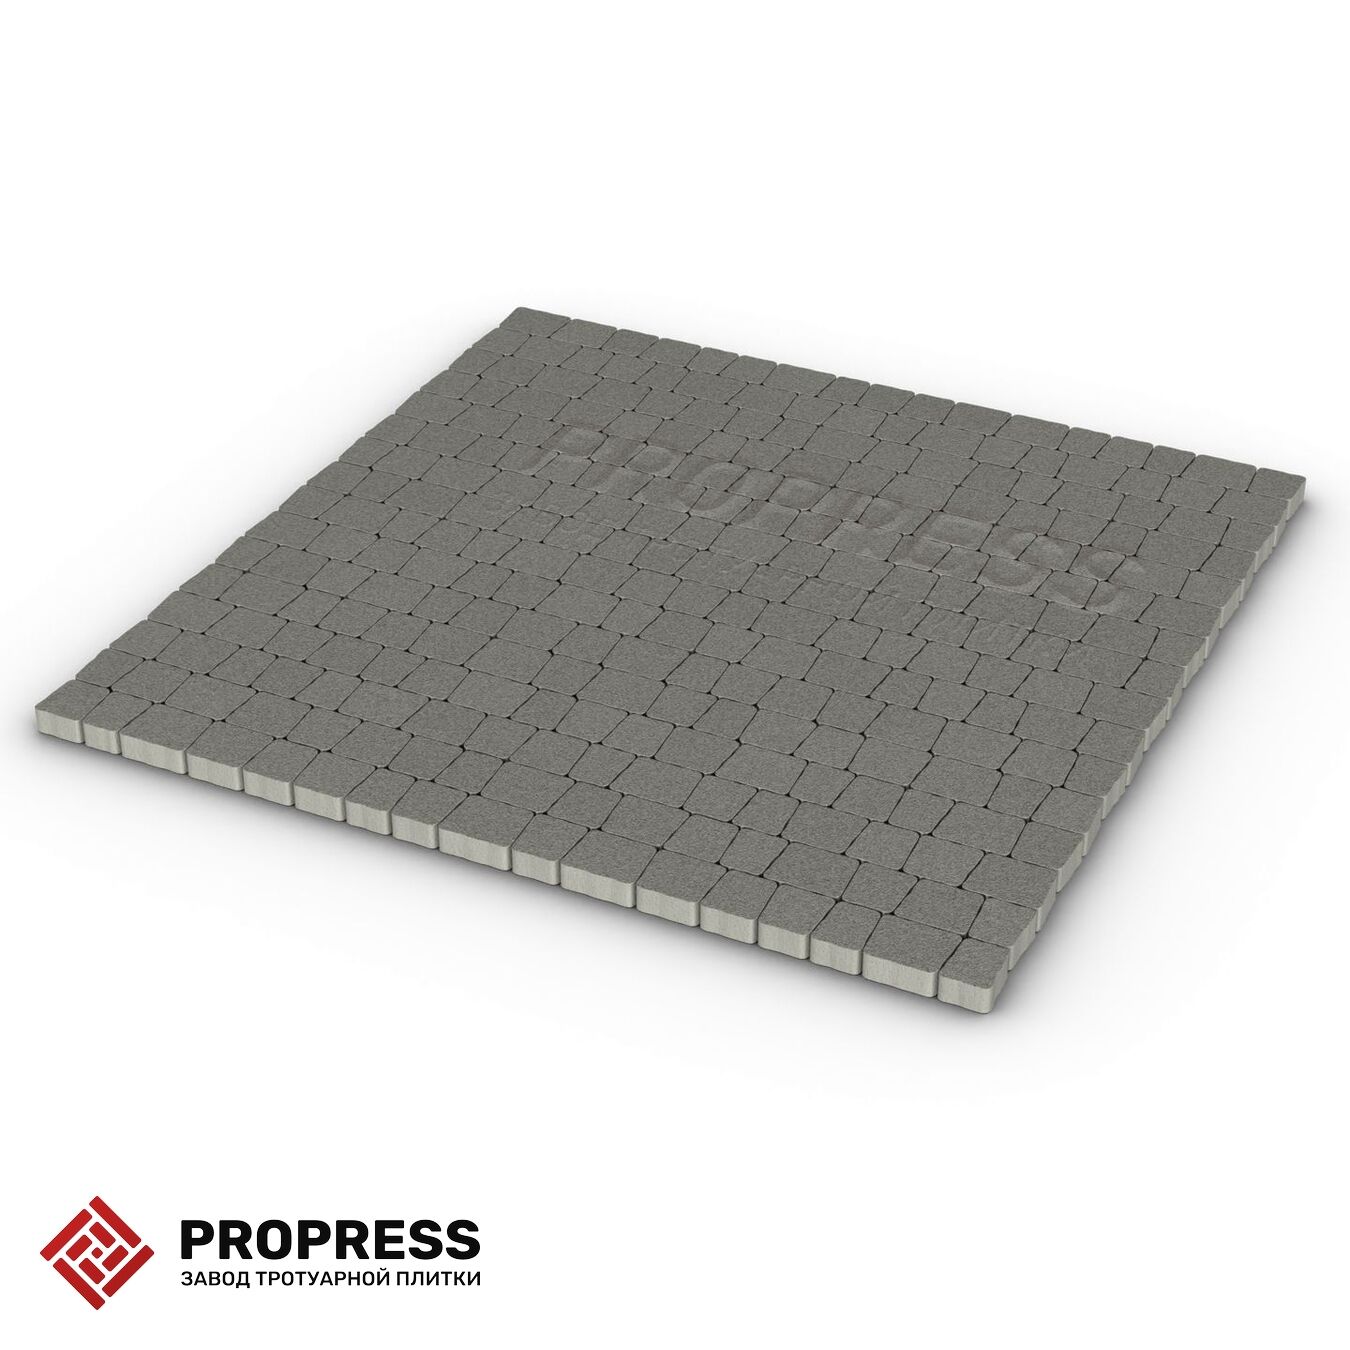 Тротуарная плитка Пропресс Антик Серый мрамор 40 мм